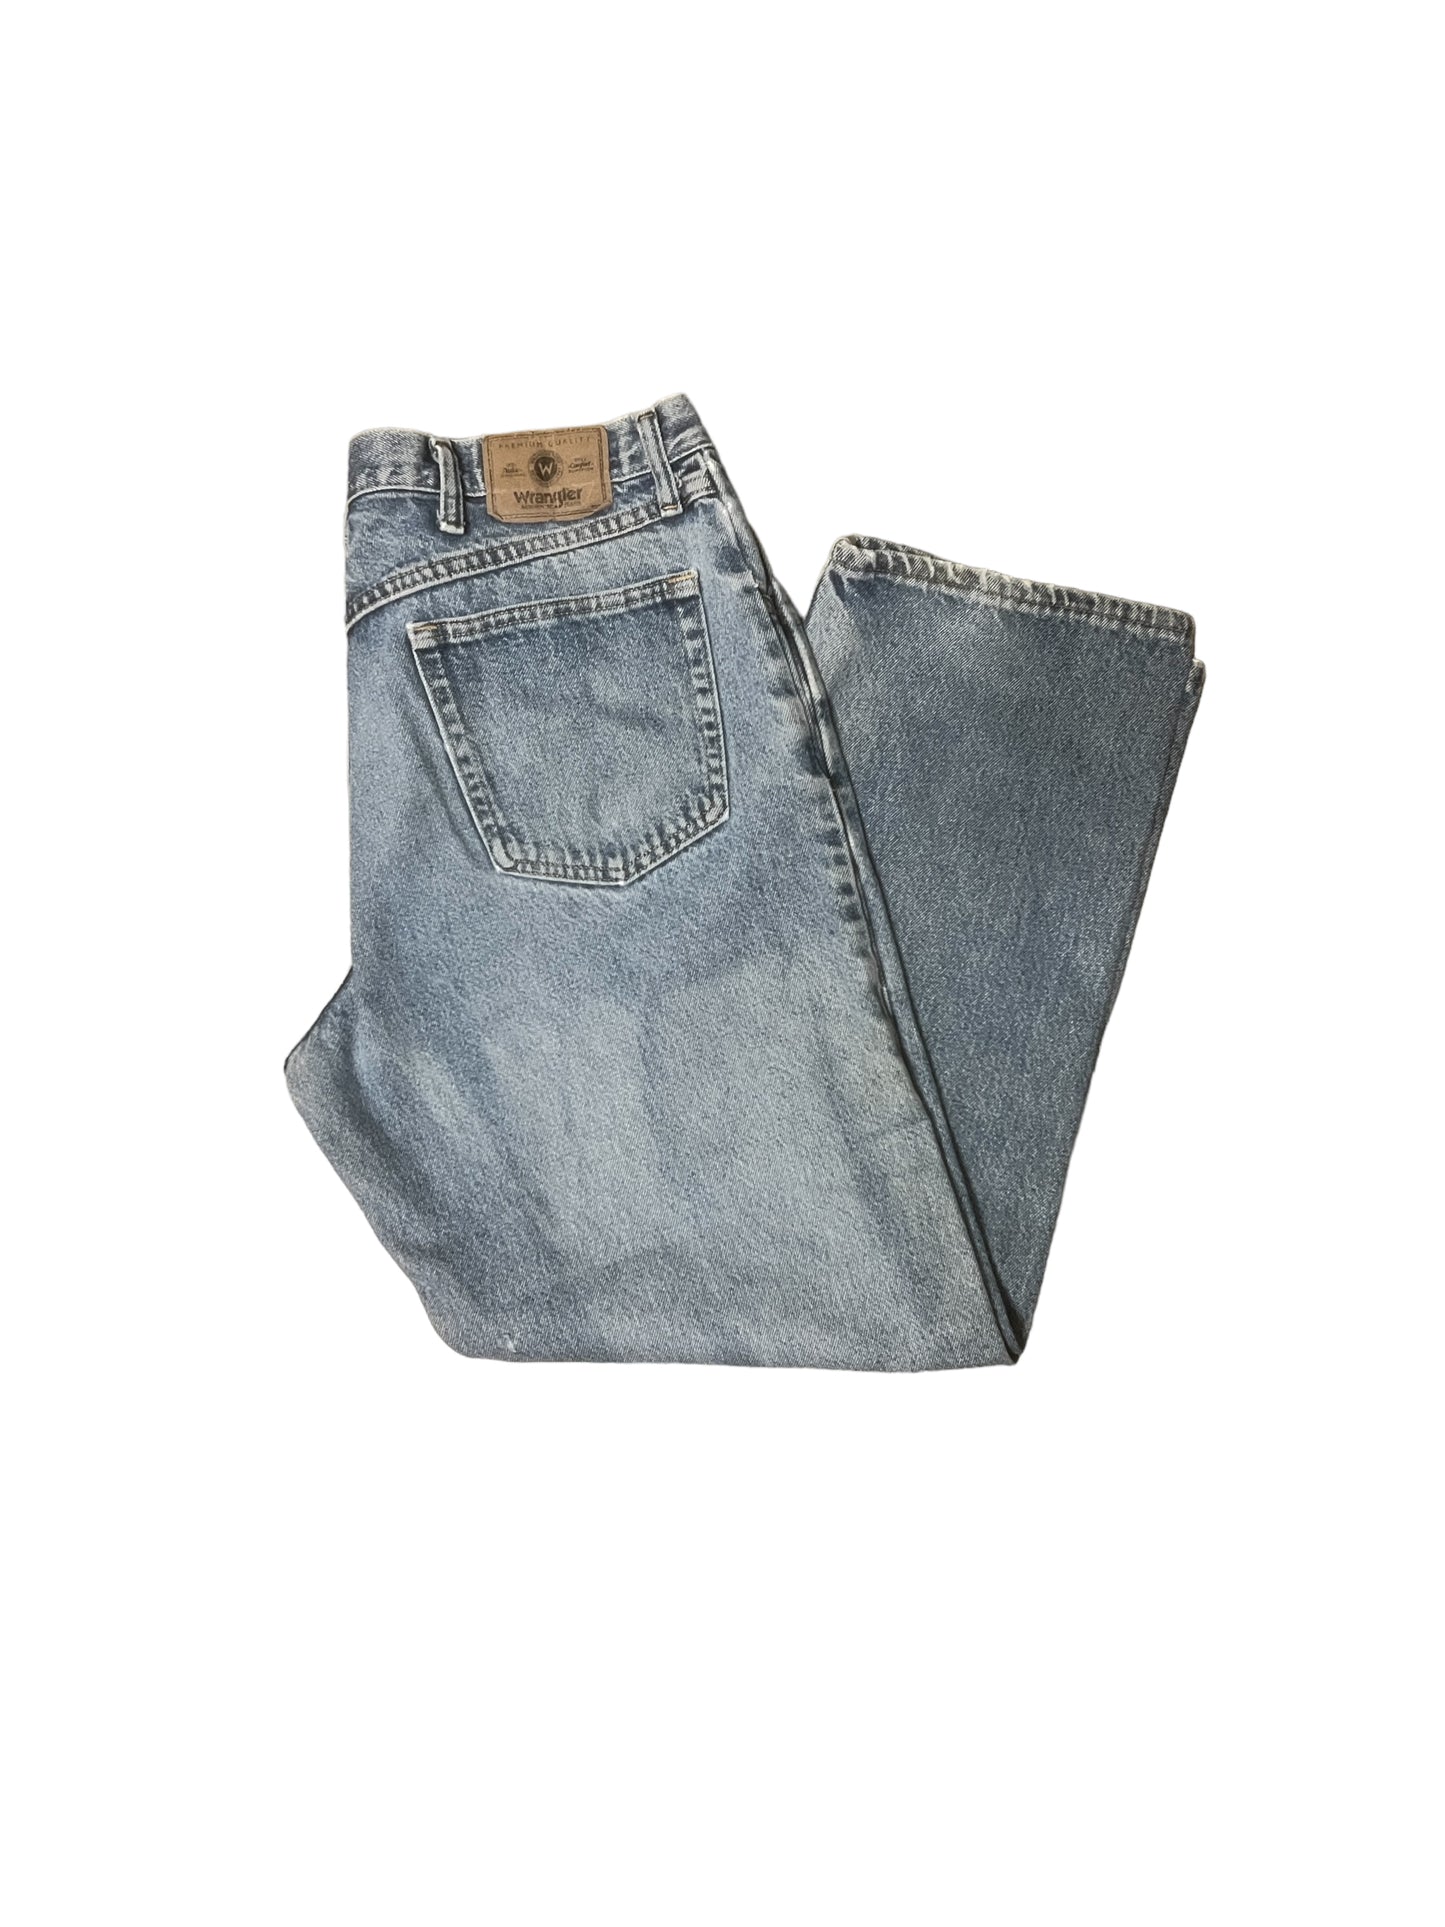 Vintage Wrangler Pants - 36x29